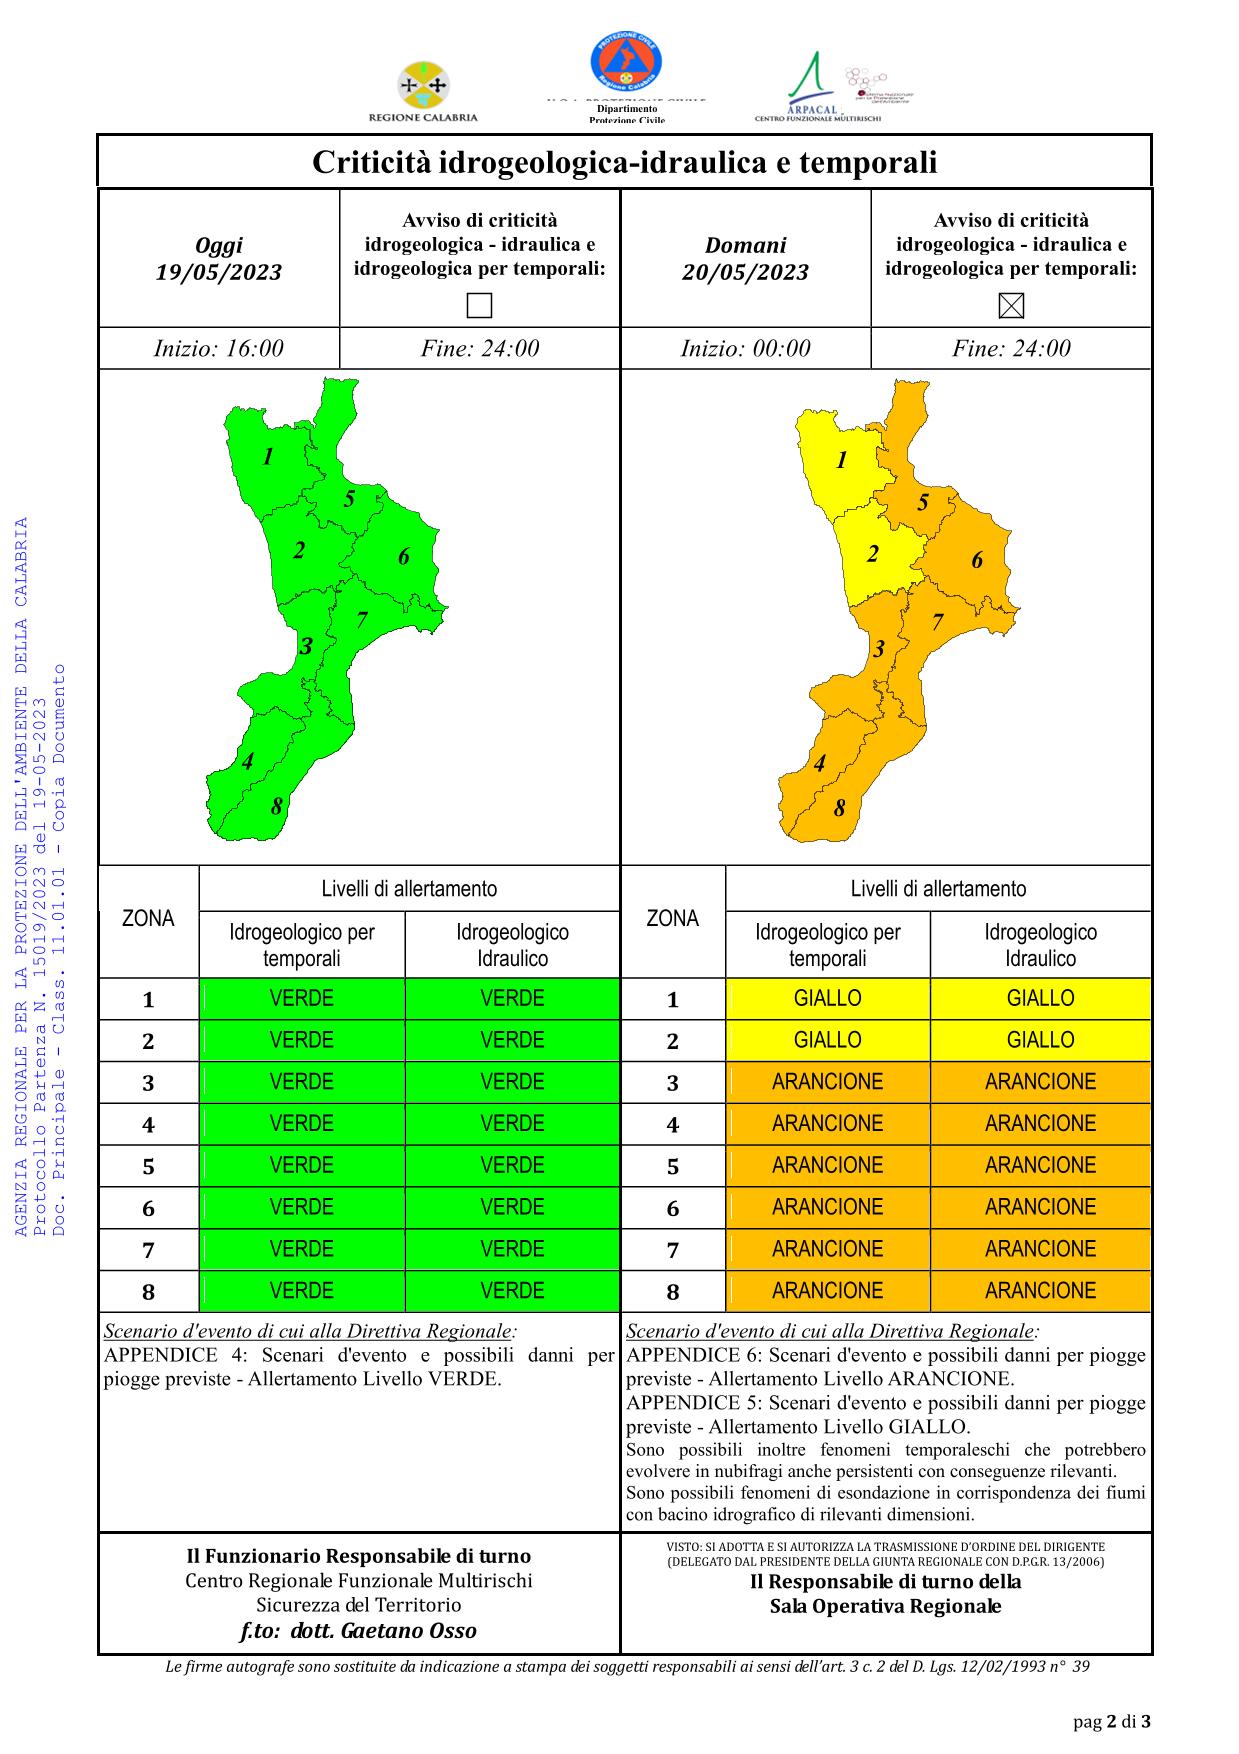 Criticità idrogeologica-idraulica e temporali in Calabria 19-05-2023